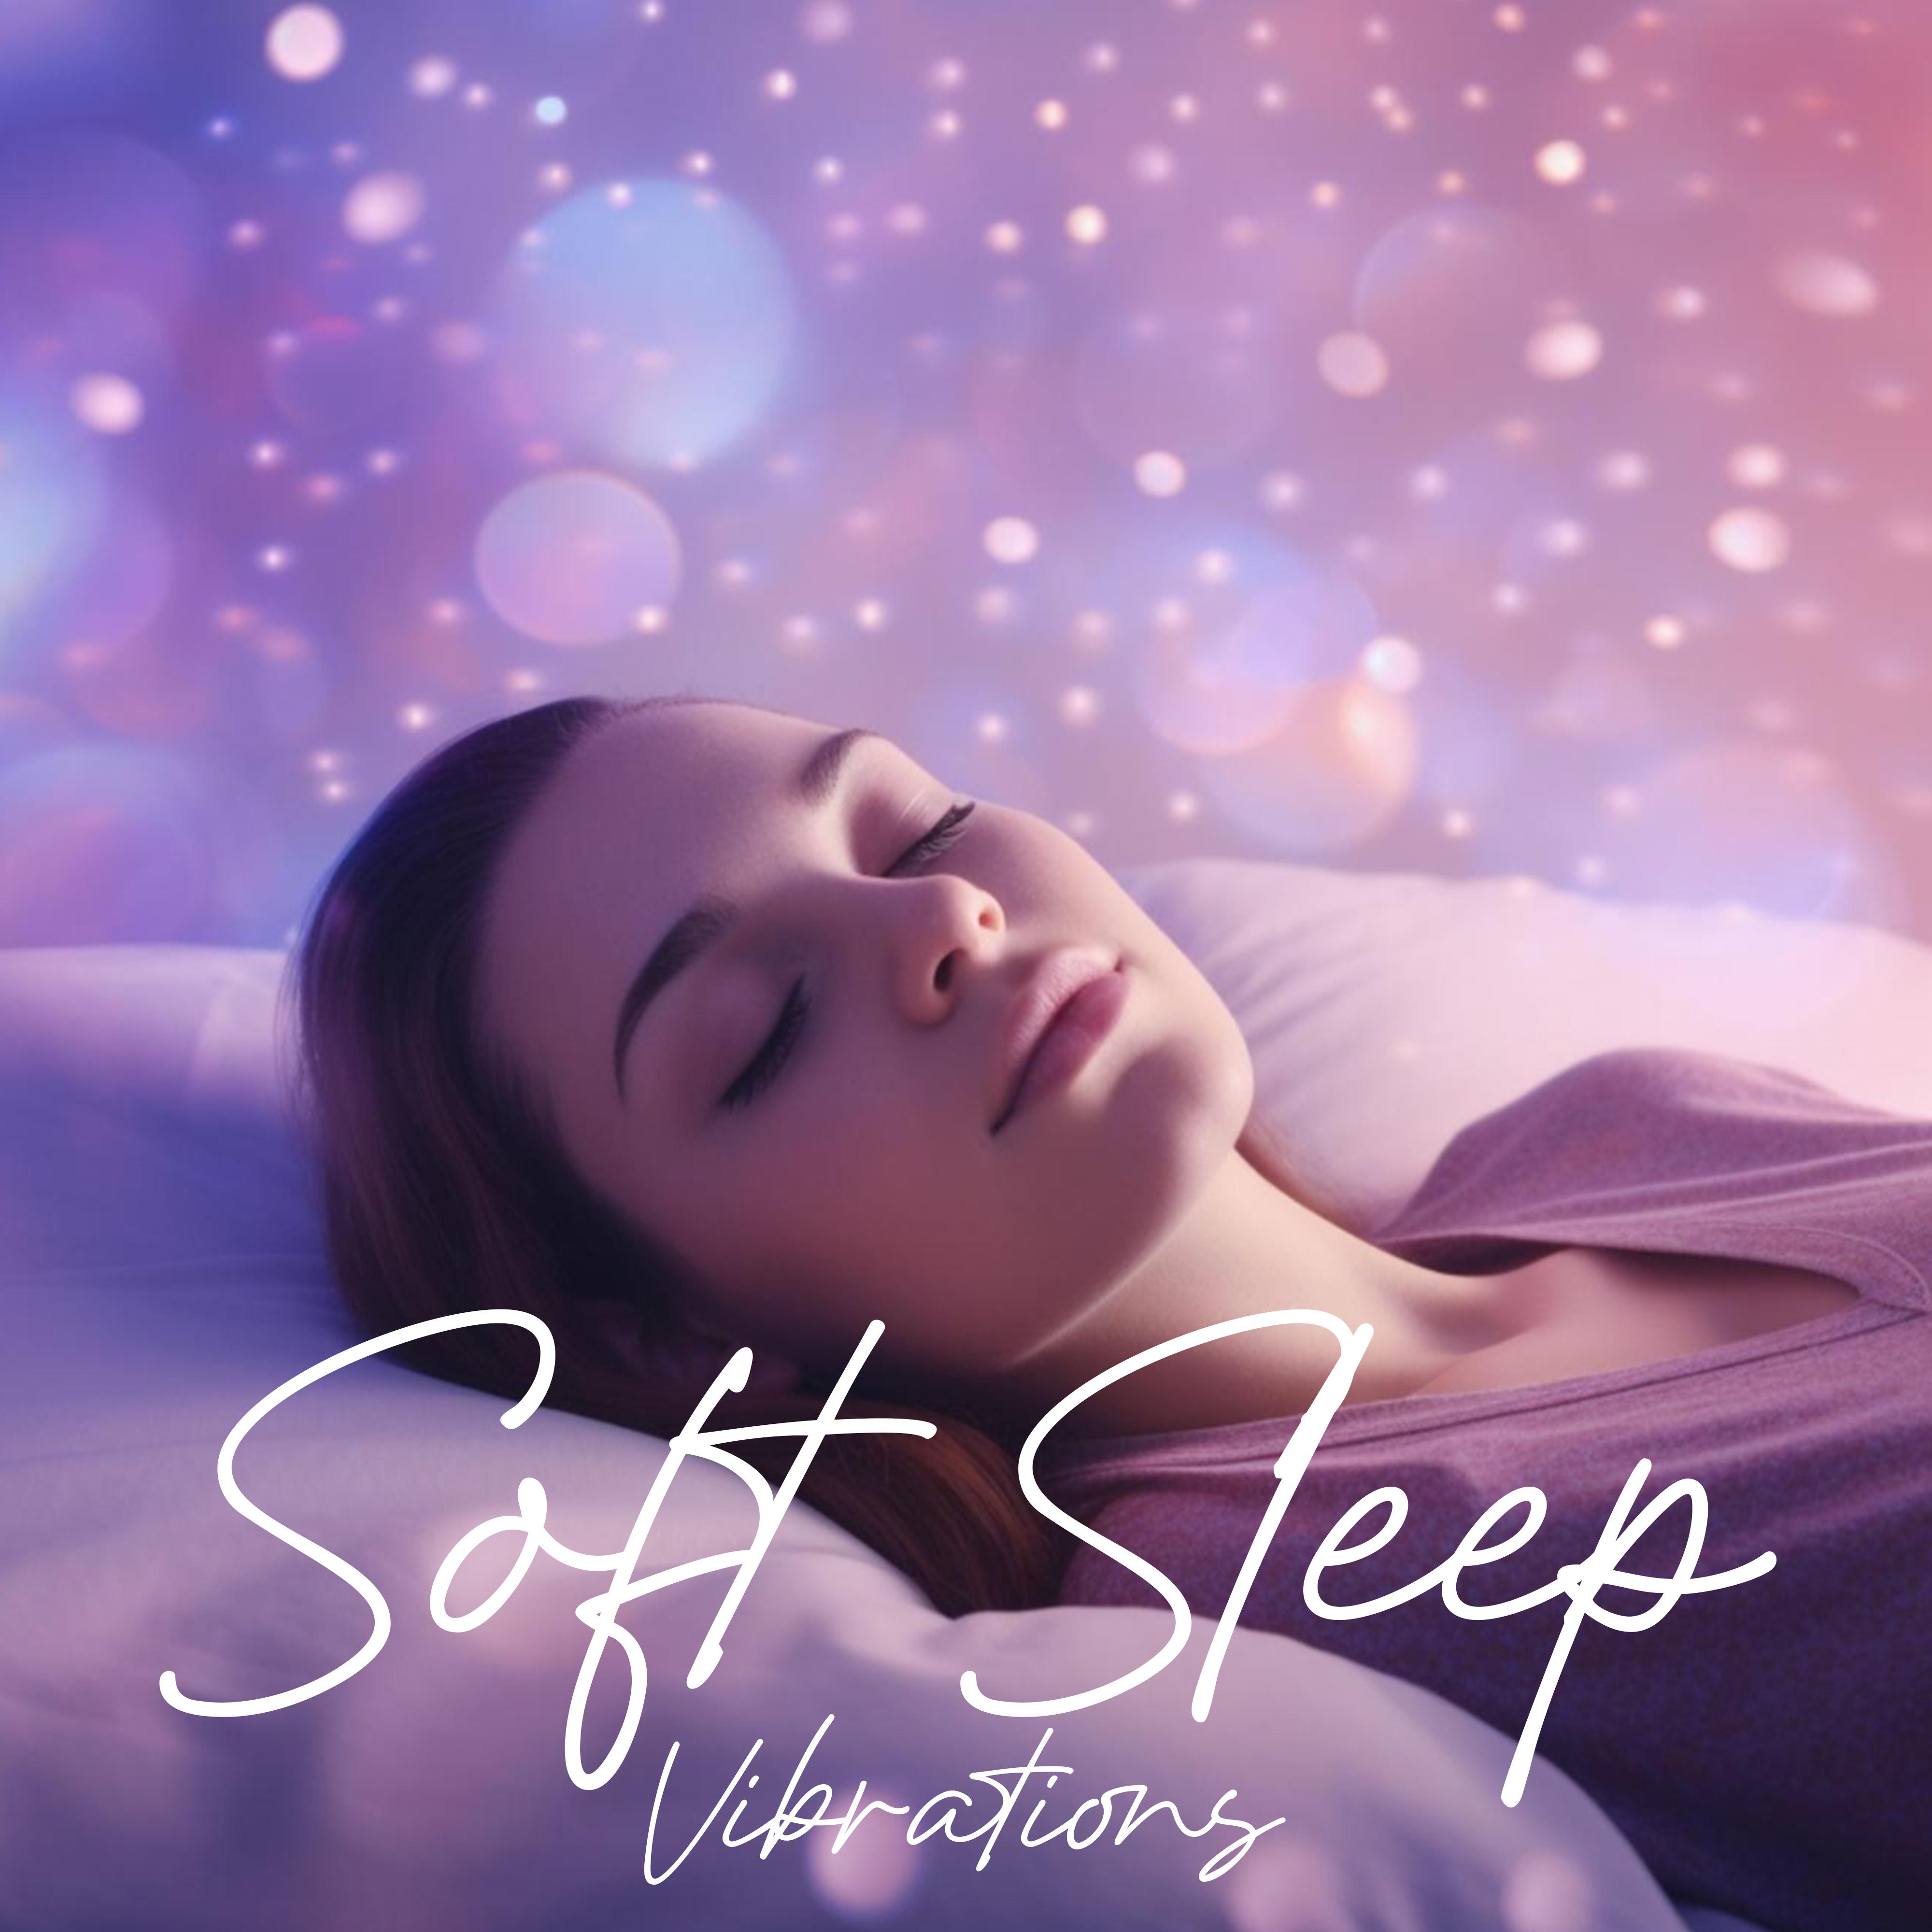 Tranquility Sleep Ambient - Self-Healing